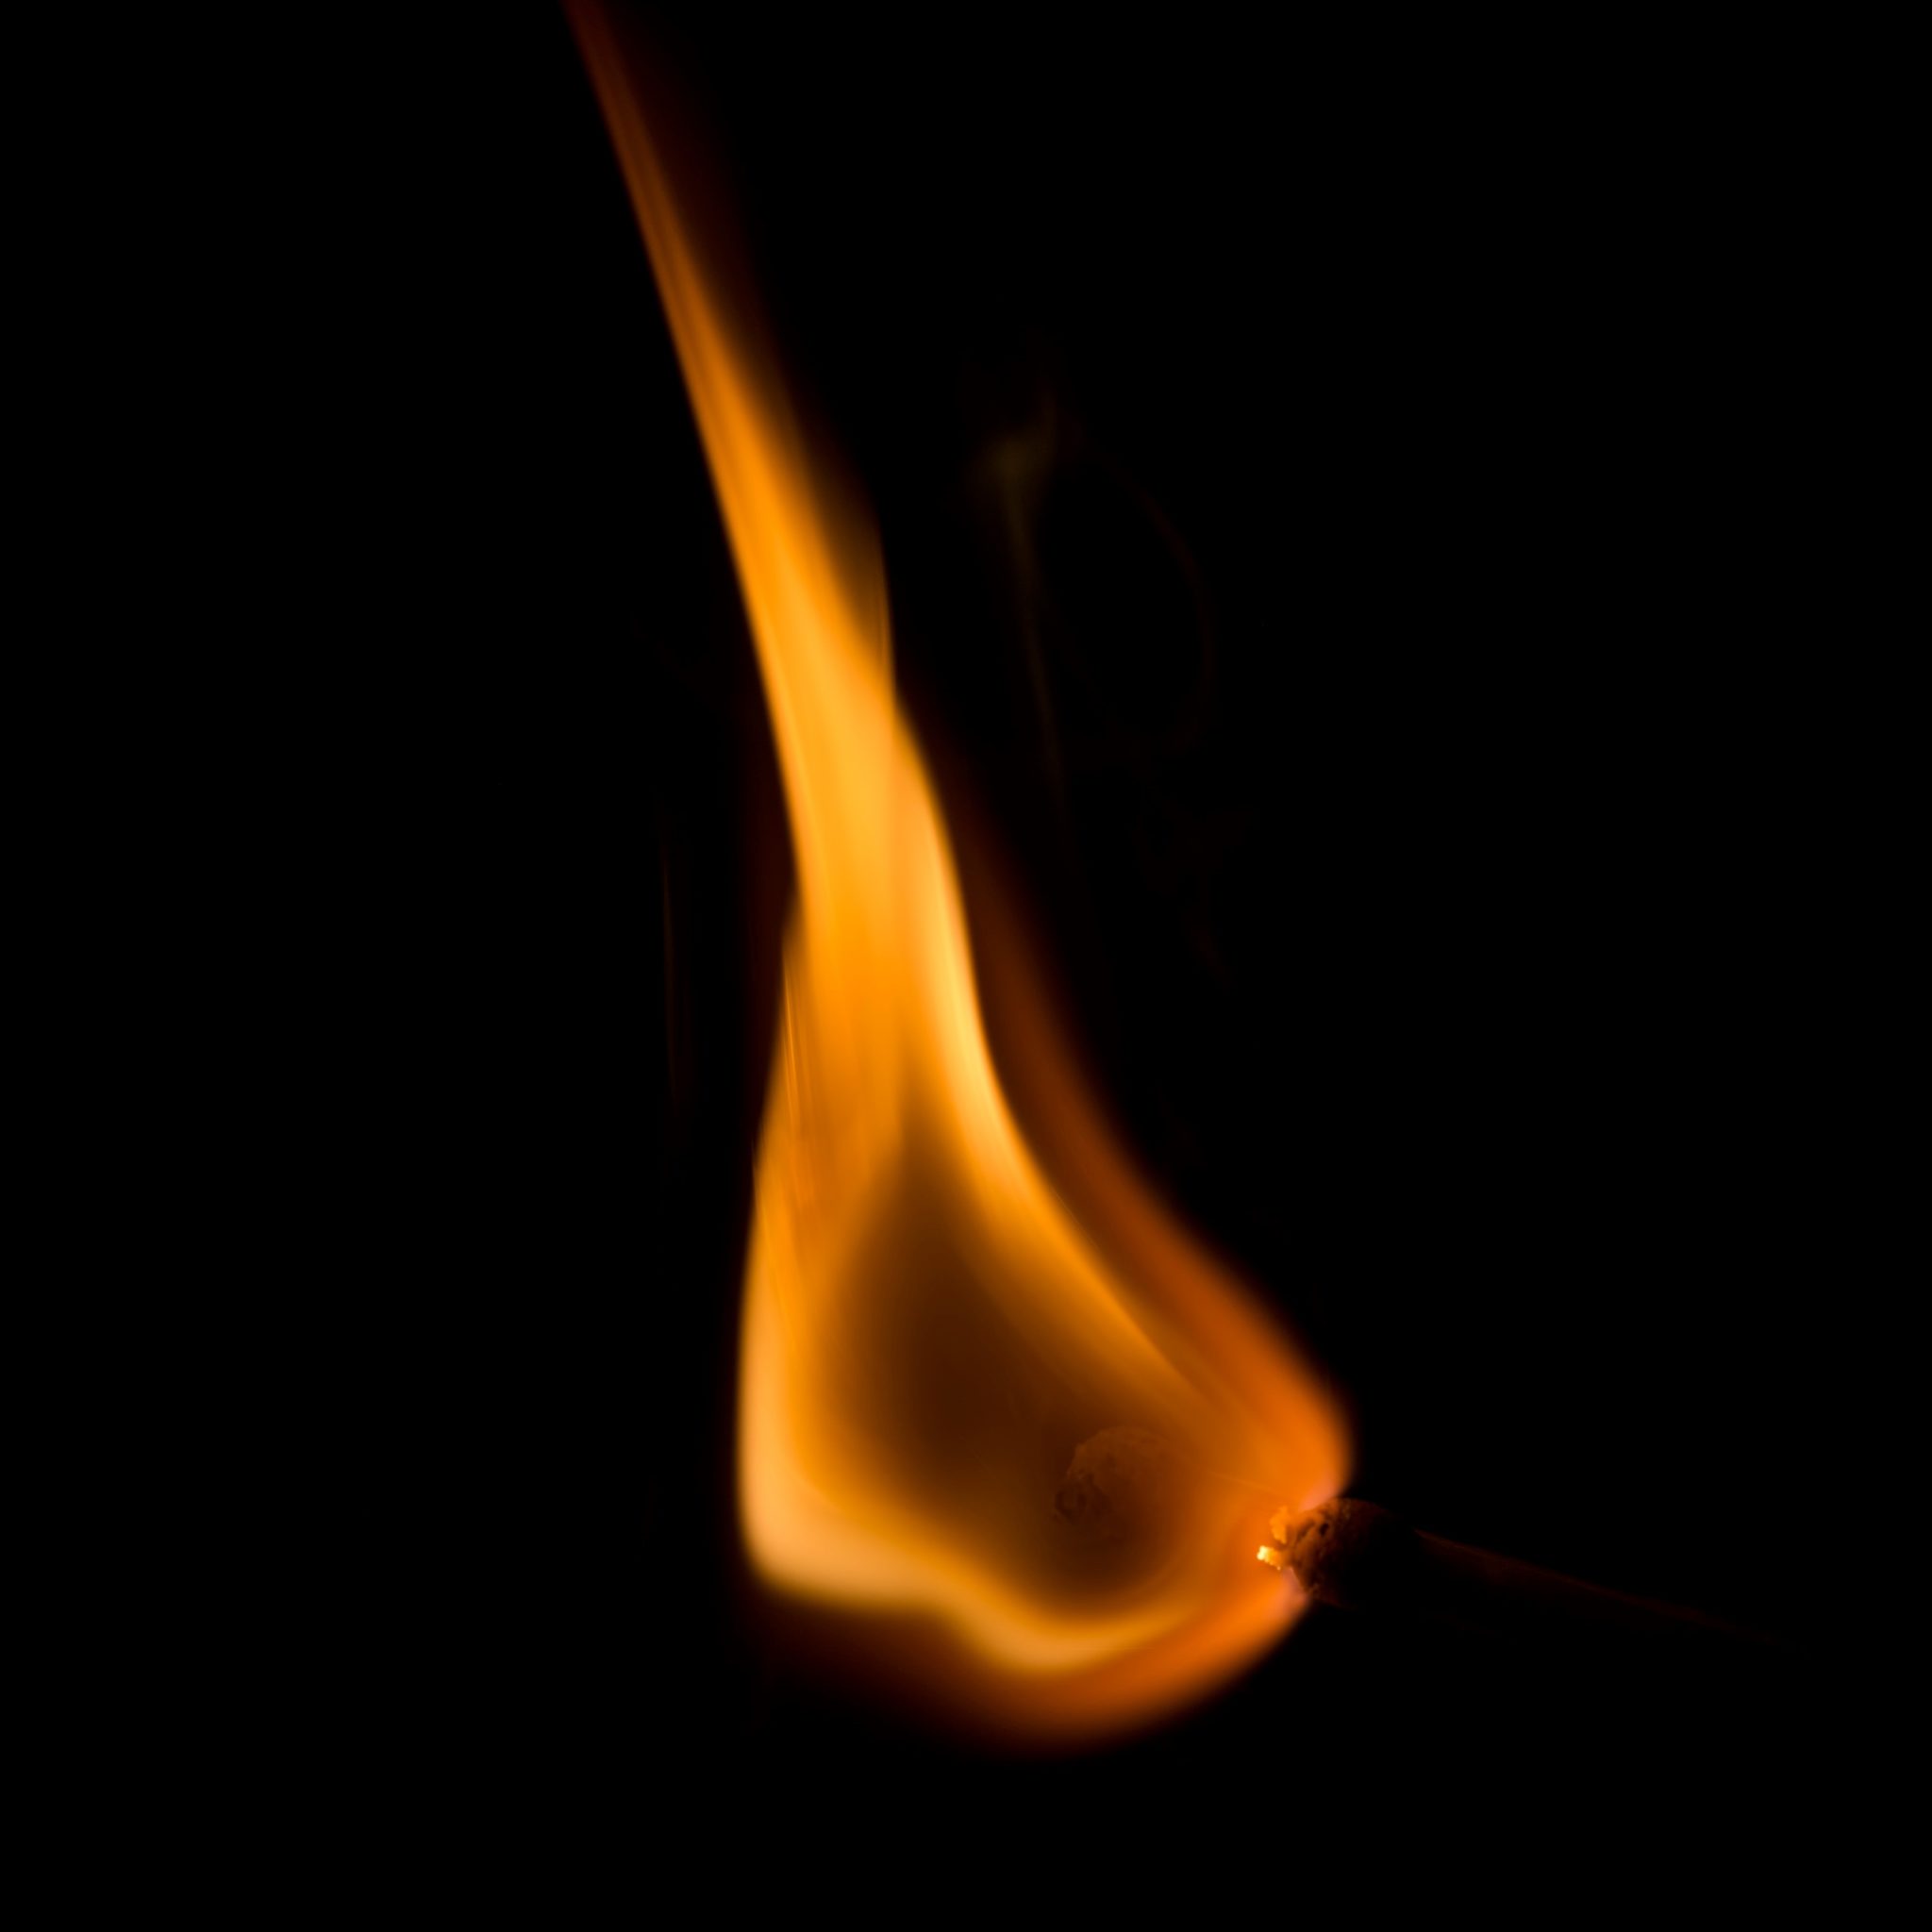 flame against dark background